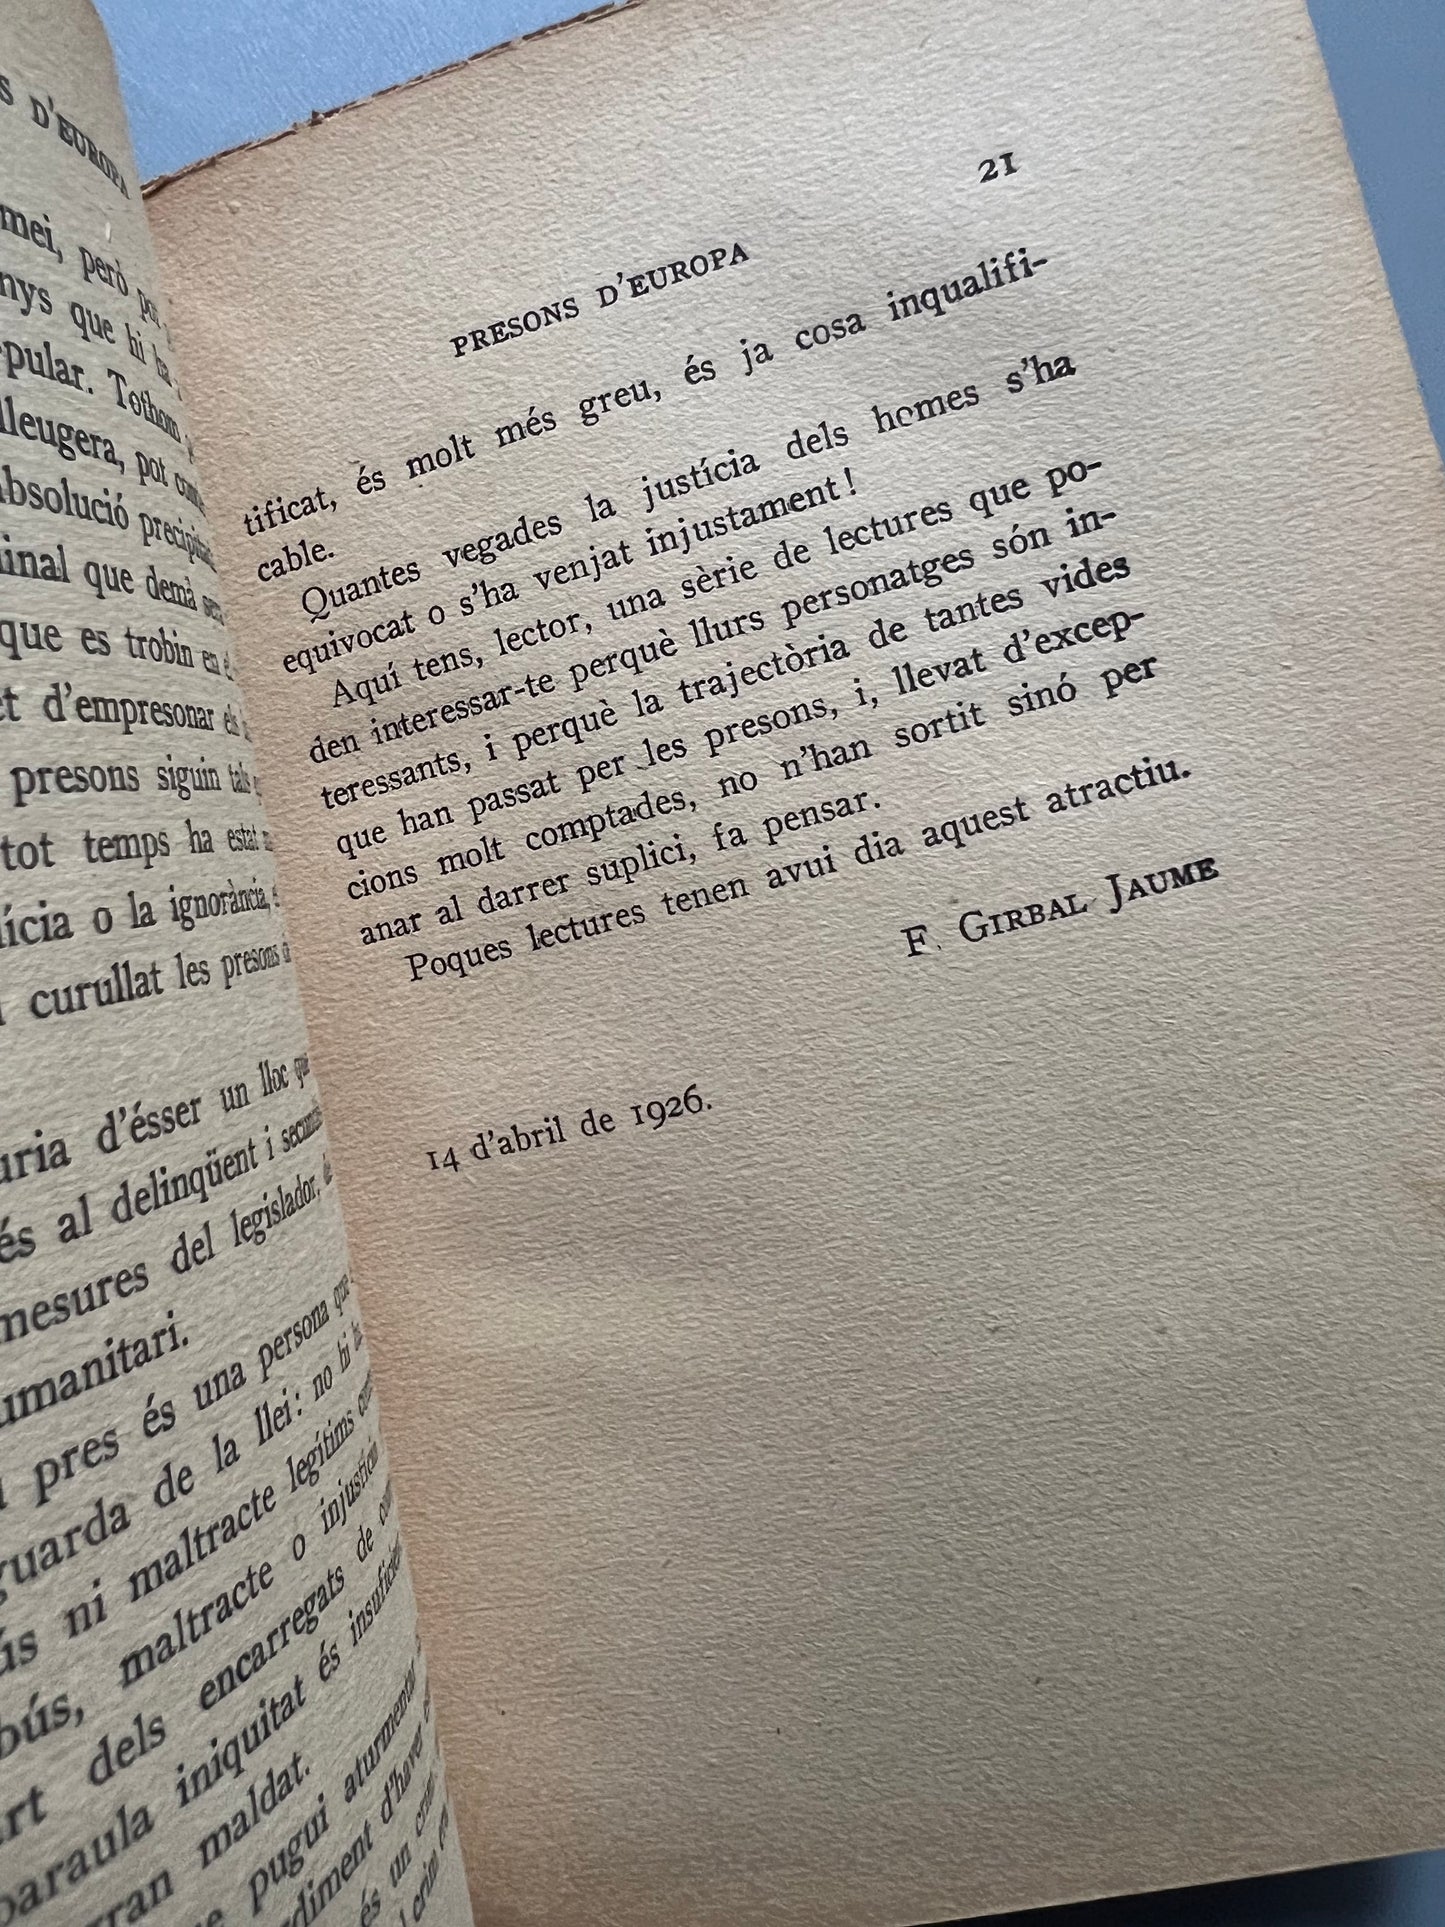 Presons d'Europa, Les presons de Barcelona, F. Girbal Jaume - Antoni López llibreter, 1926